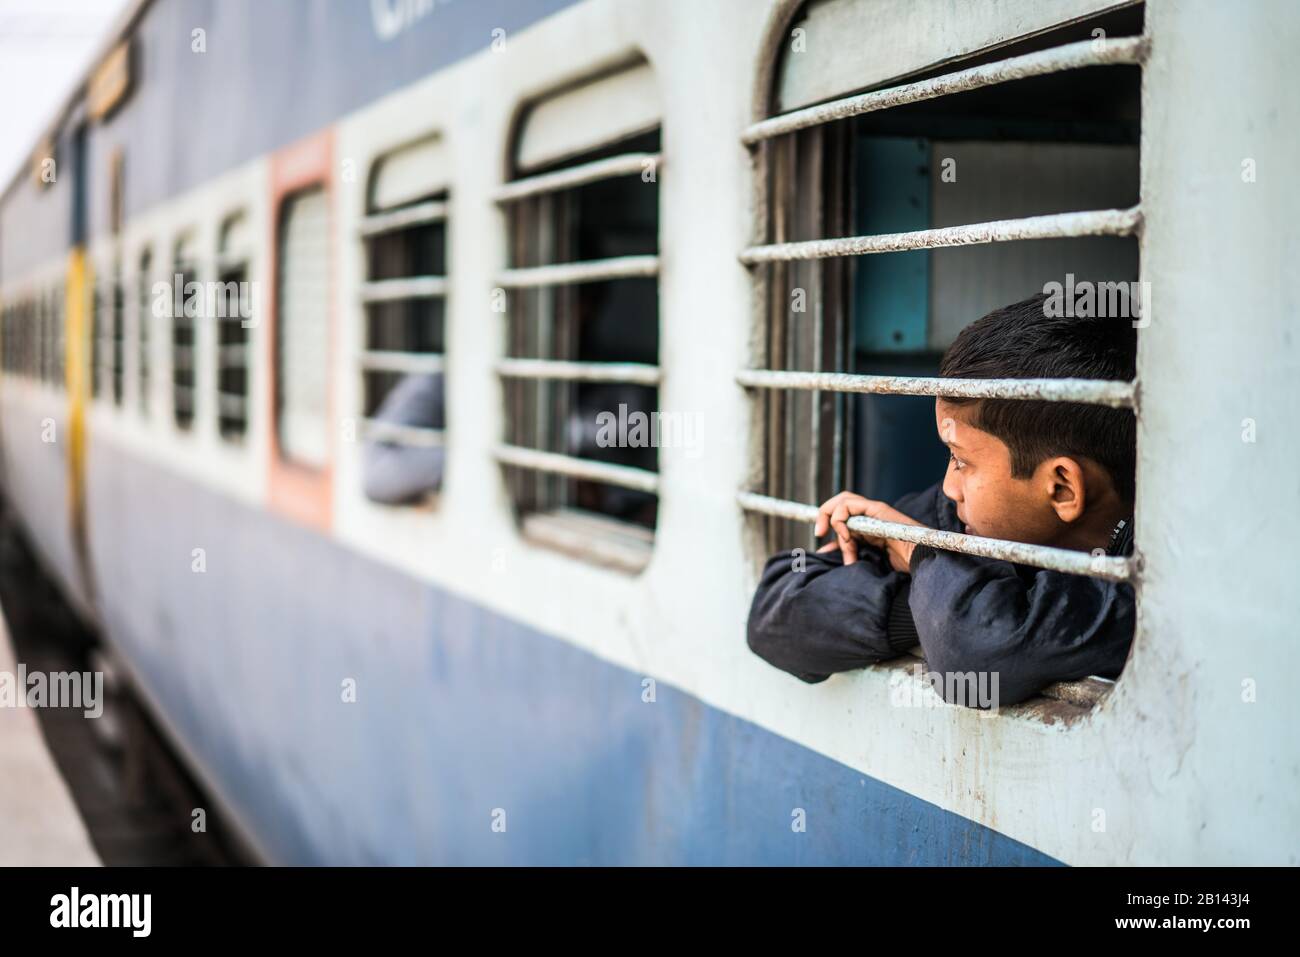 Local poeple in the train, India, Asia Stock Photo